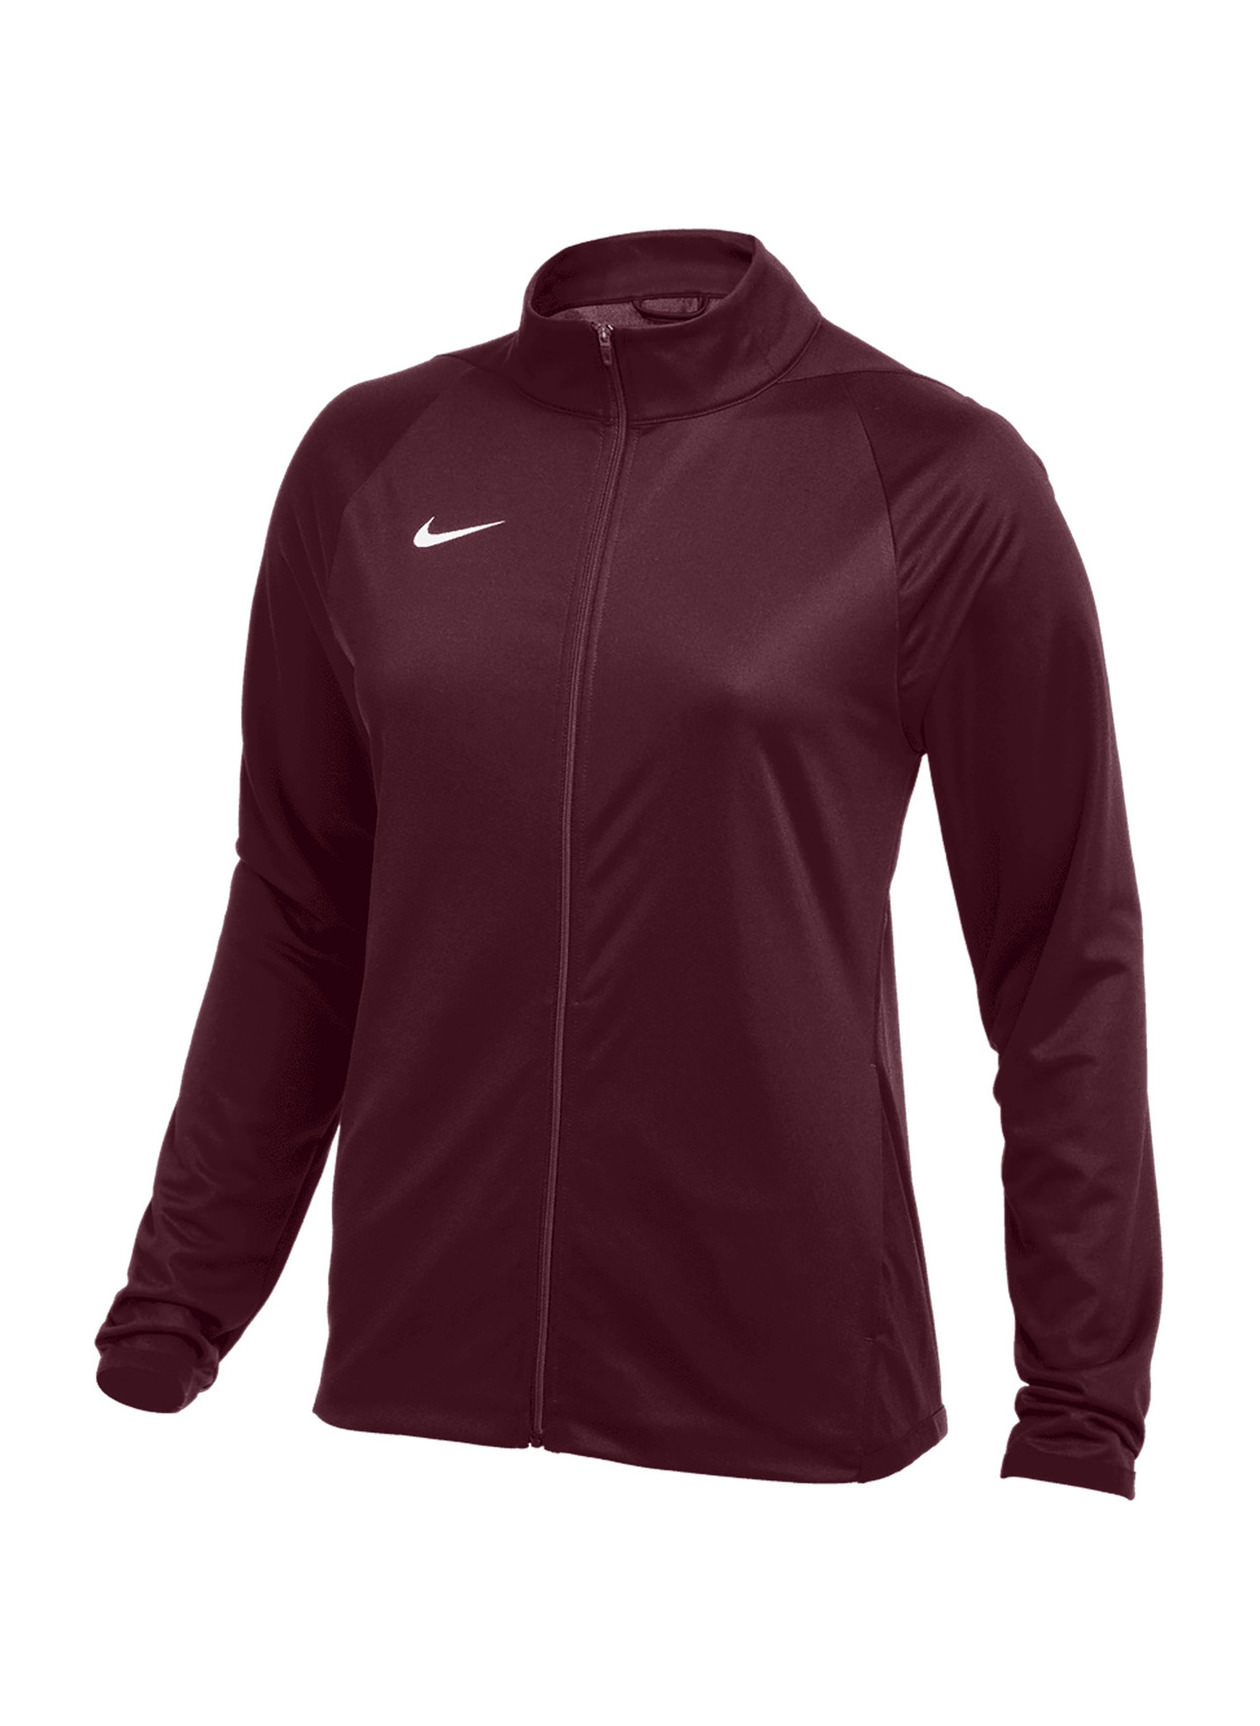 Nike Women's Team Dark Maroon / White Epic Knit Jacket 2.0